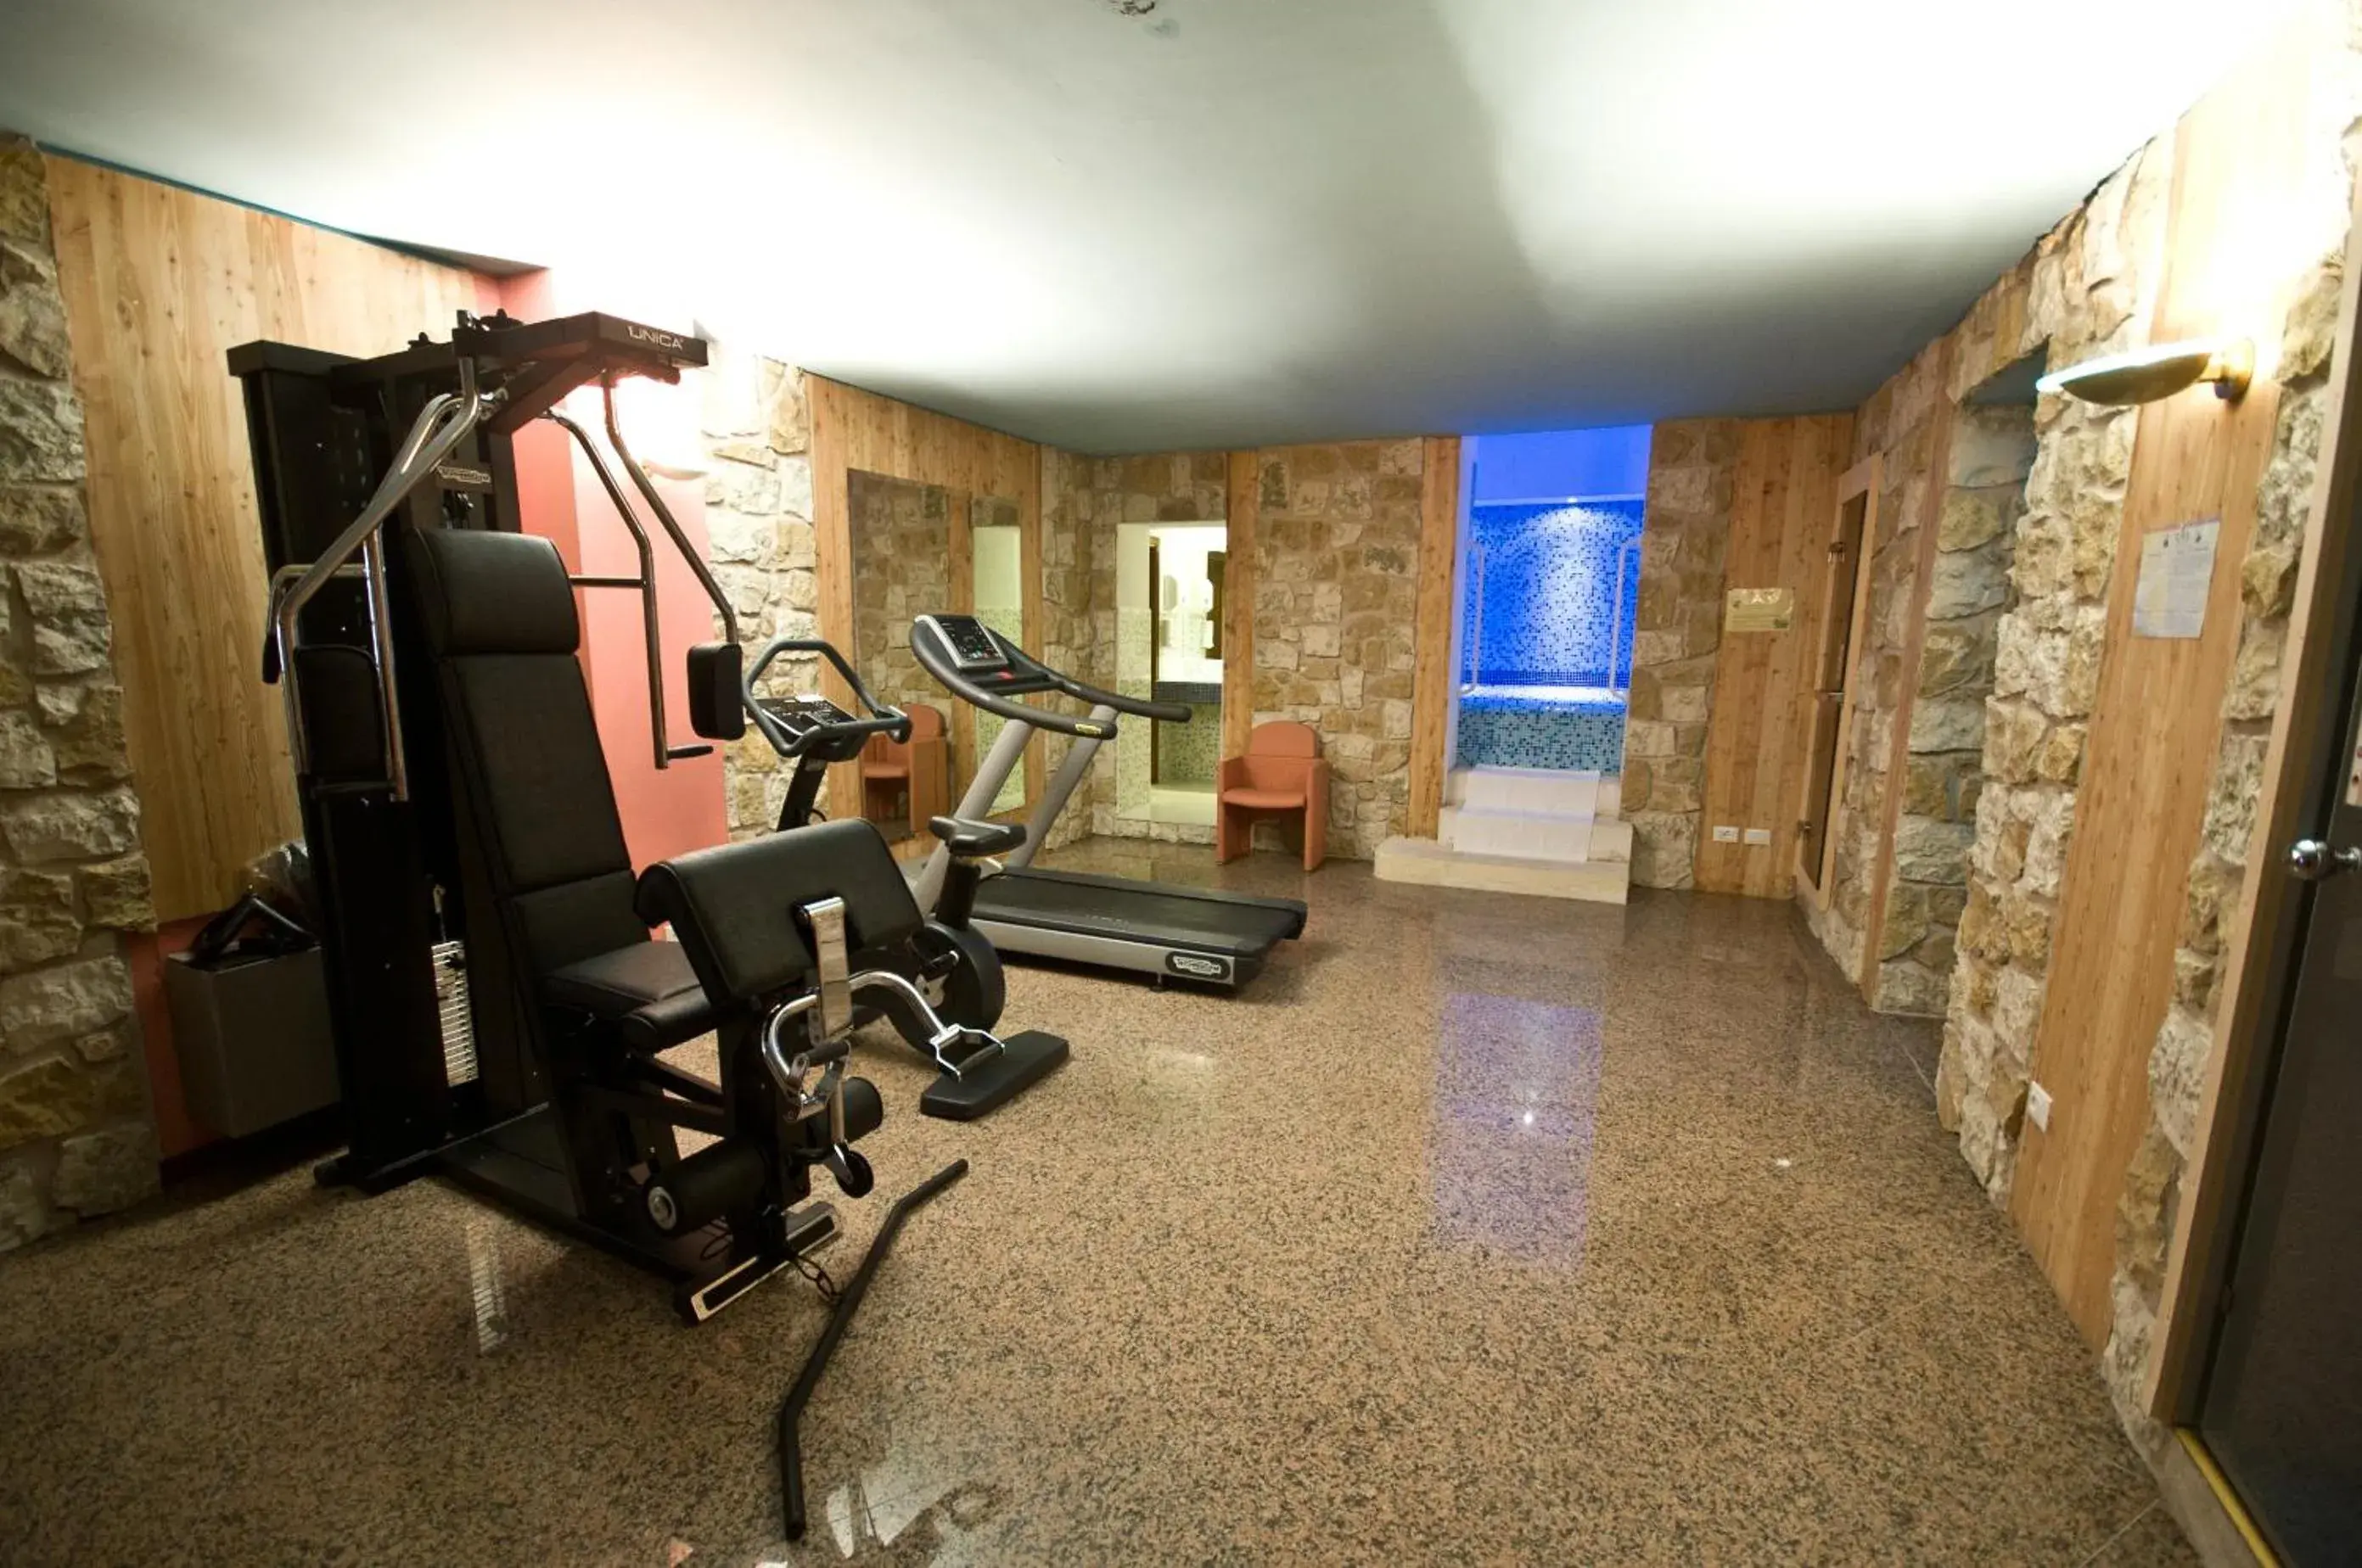 Fitness centre/facilities, Fitness Center/Facilities in Hotel Internazionale